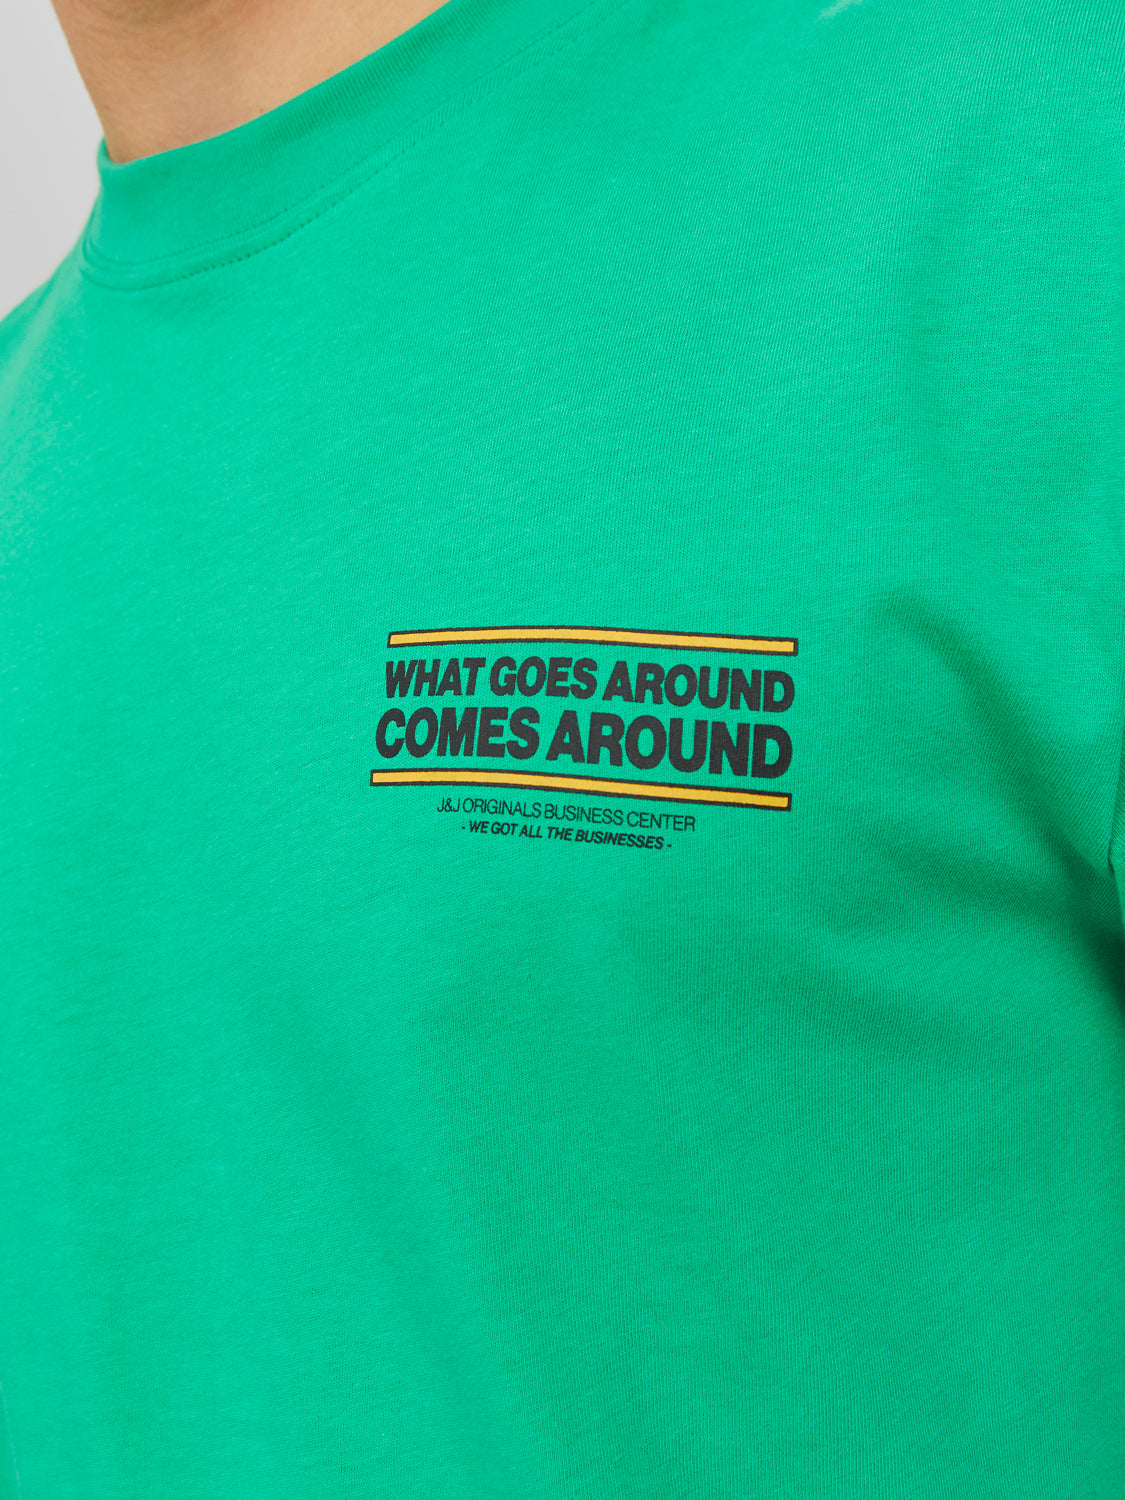 Camiseta de manga corta- JORAMUSEMENT Verde